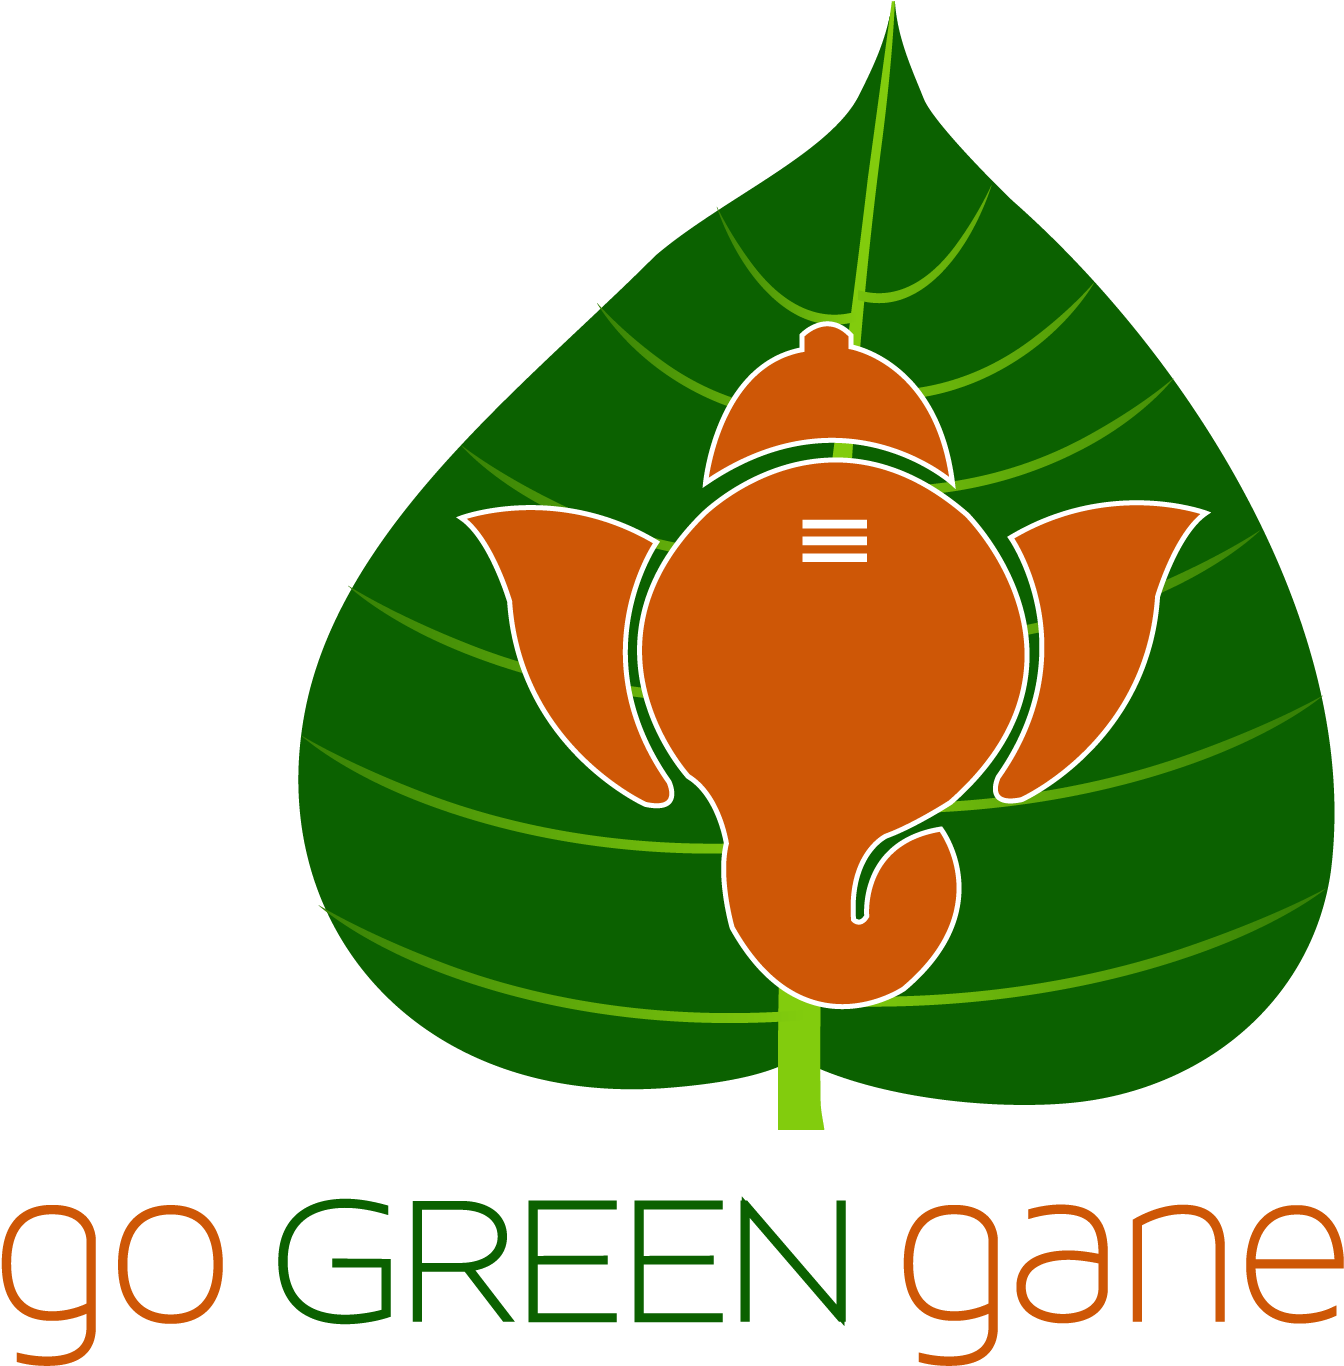 Go Green Ganesha - Go Green Ganesha (1368x1368)